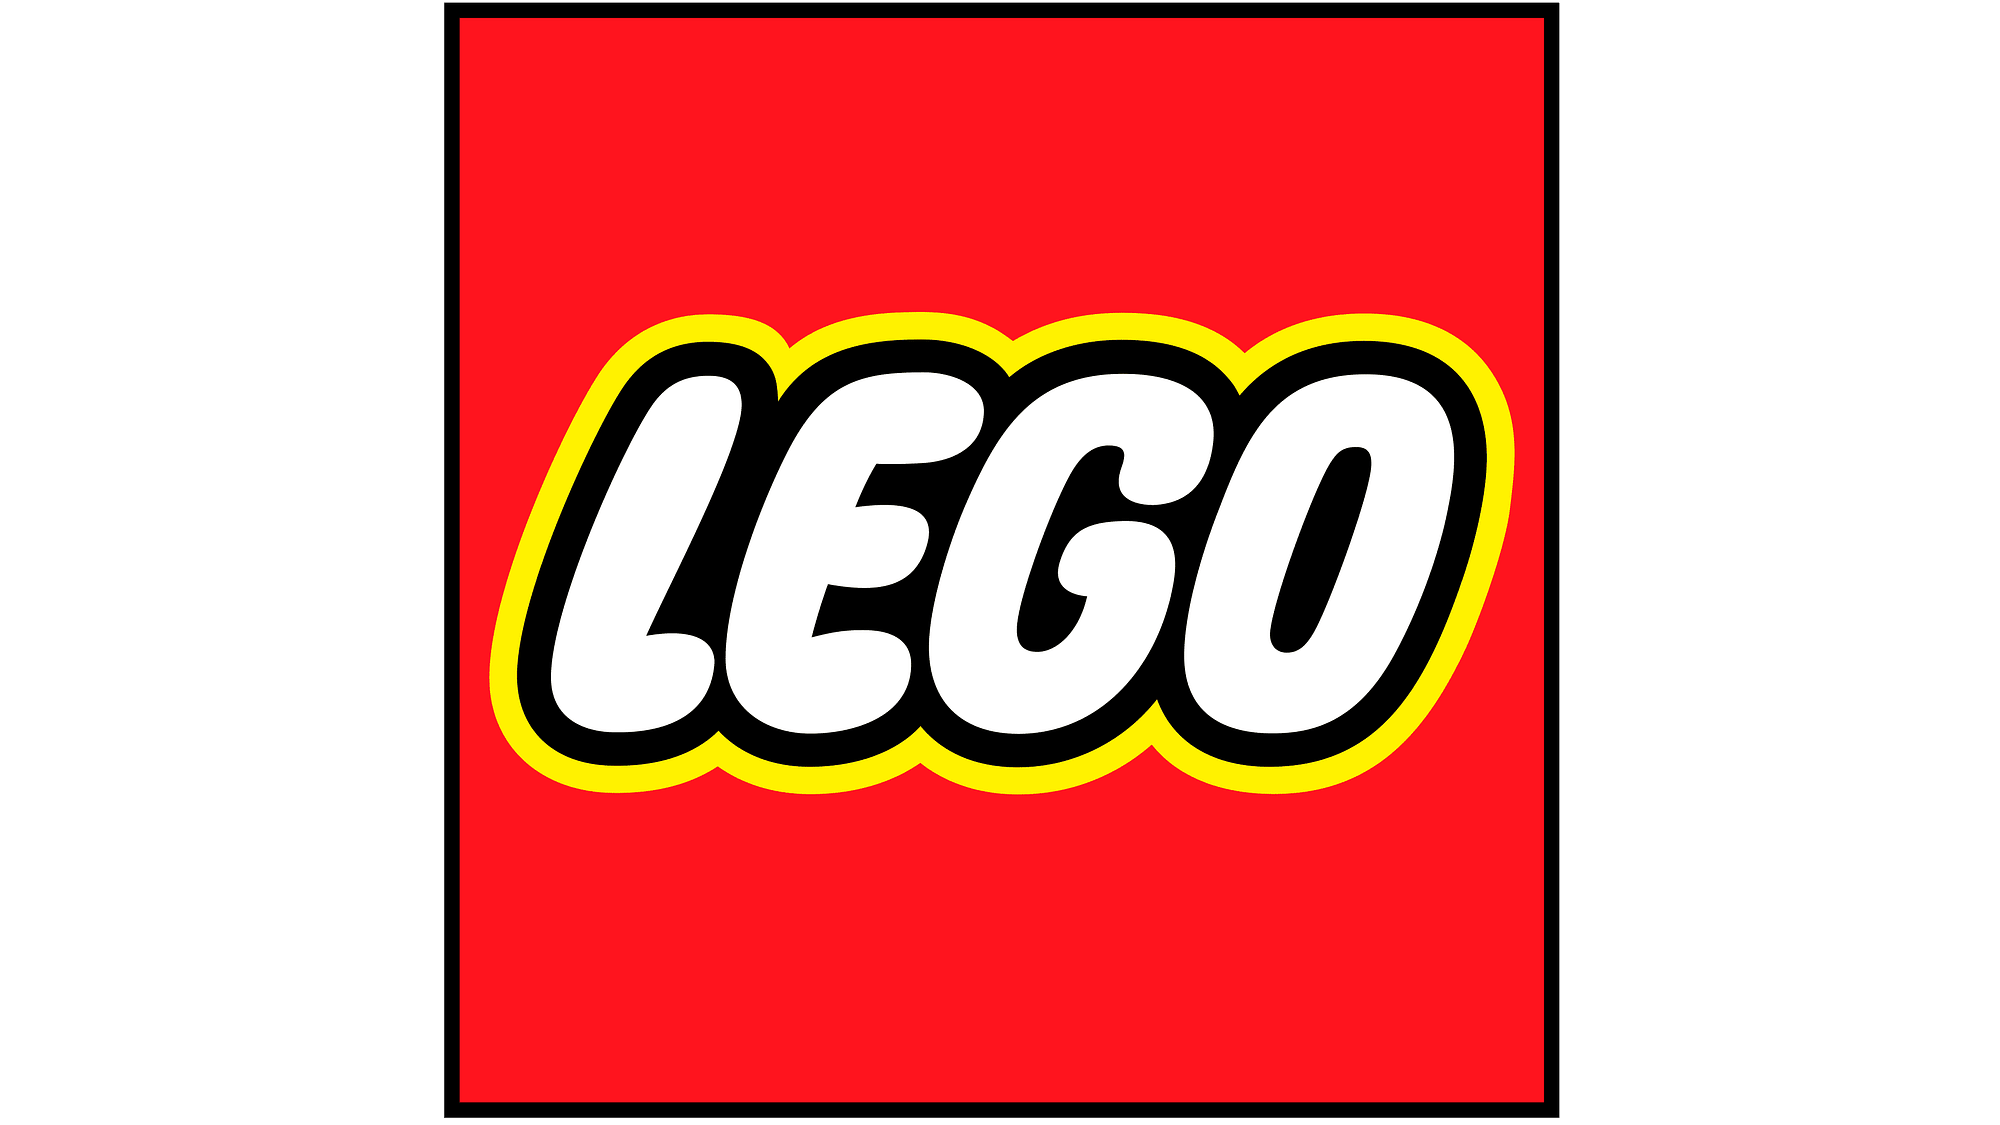 Logotype vs Logomark: The Lego logotype is fun and distinctive.